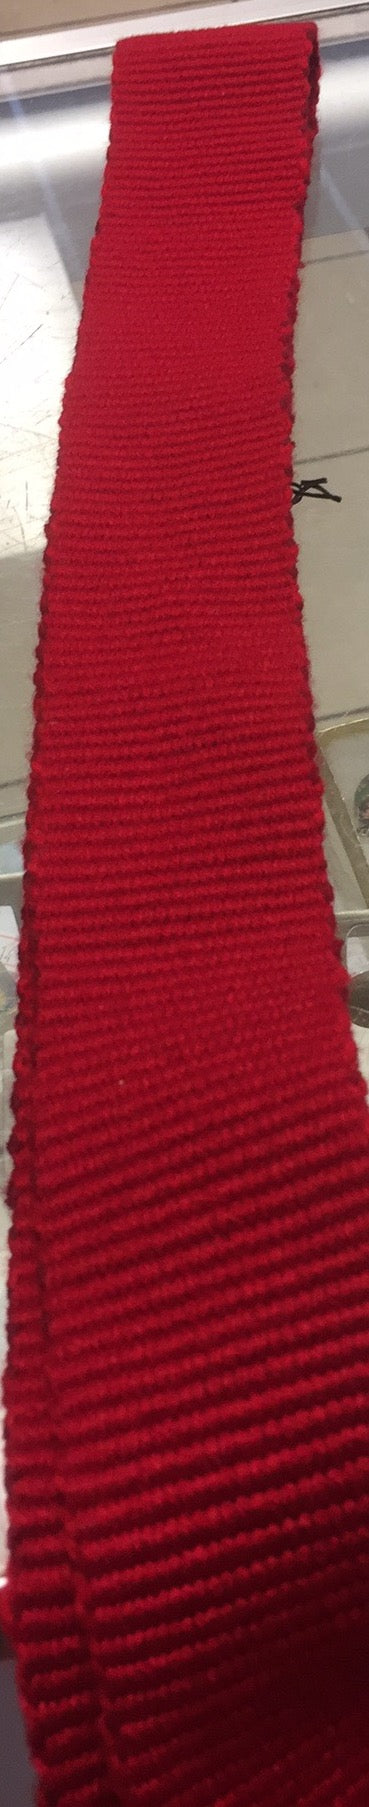 Faja roja algodón/ 100% cotton red belt (Large)